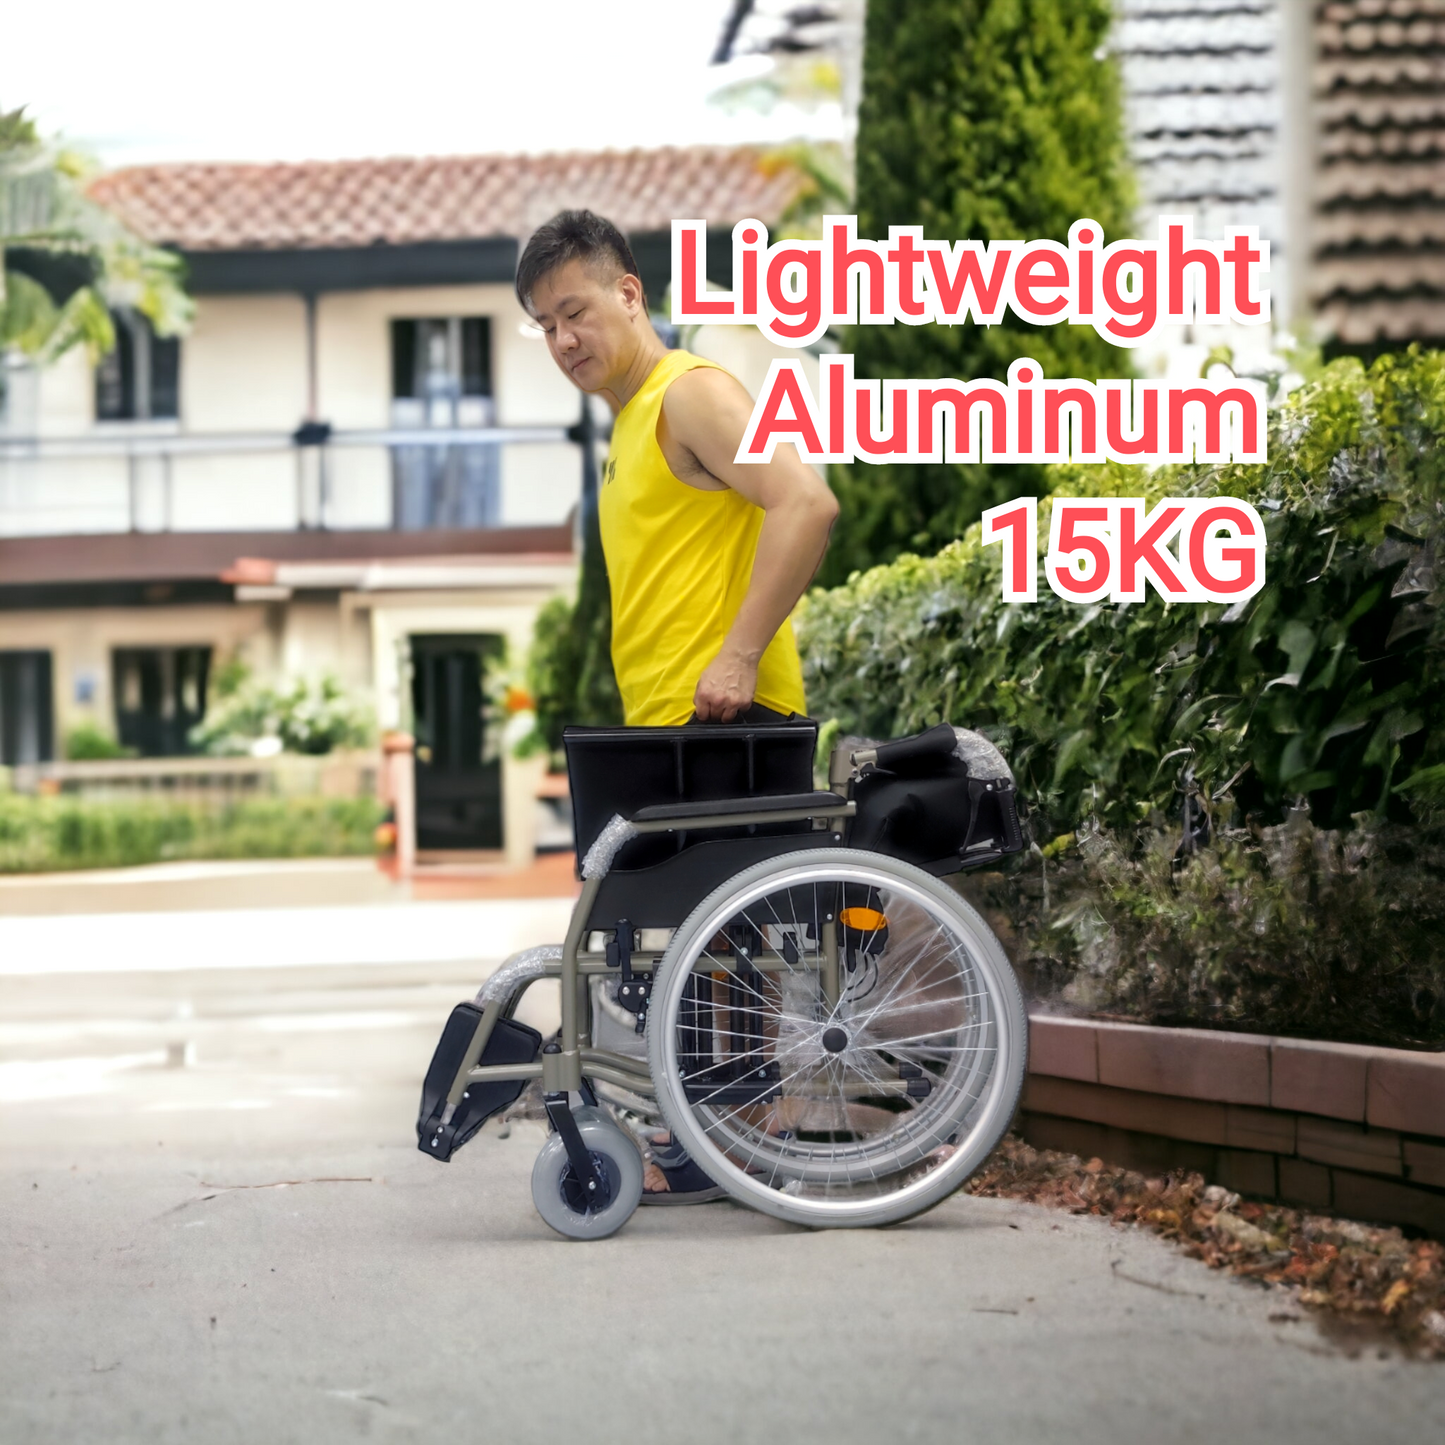 1.5 - "Model 35AL" BIG Wheelchair - Hold 150 KG + 56 CM Seat Width + Self Propelled